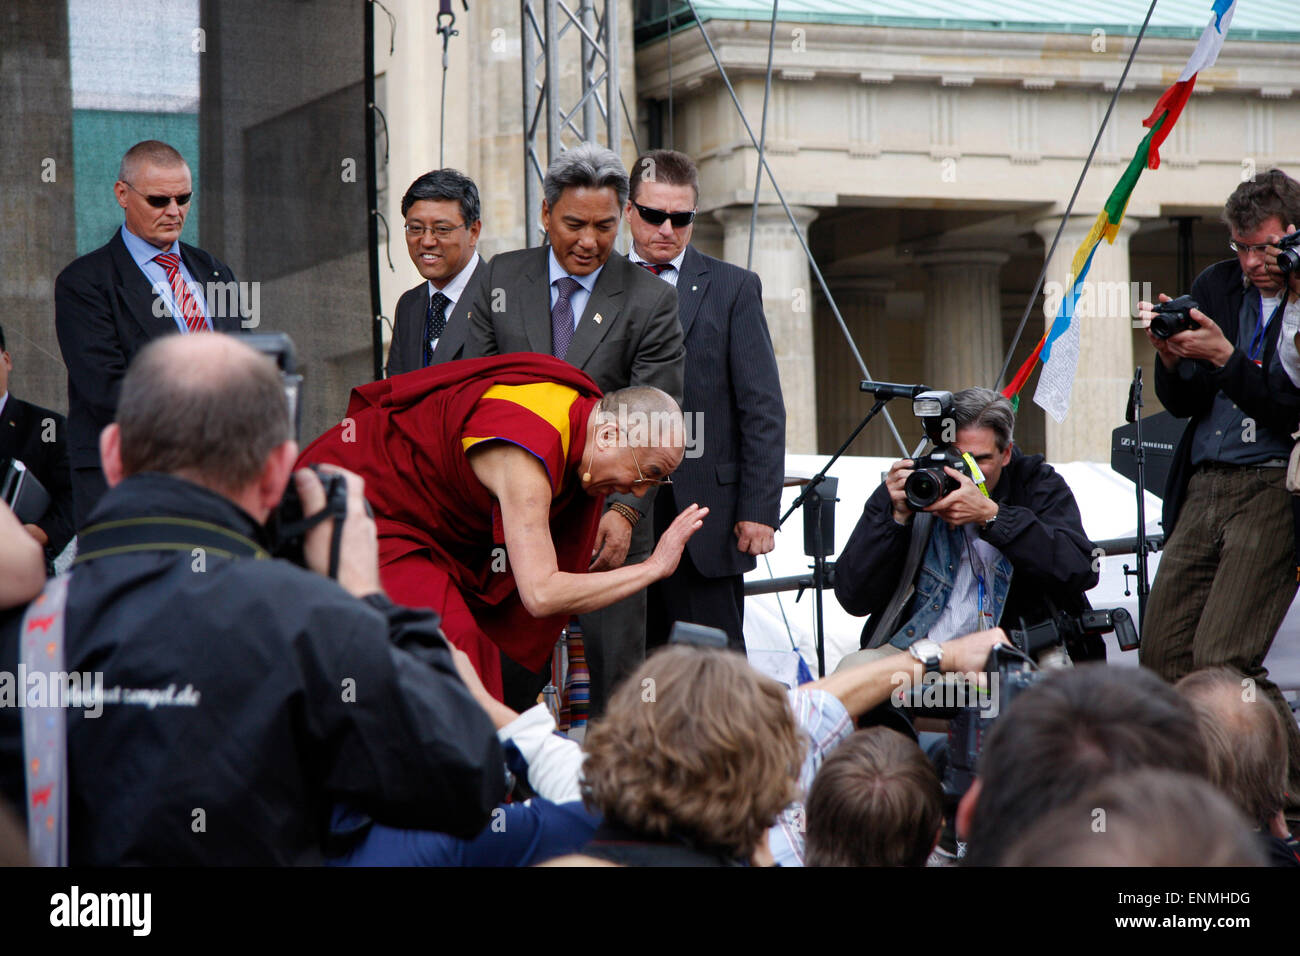 Dalai Lama, Presse - Solidaritaetskundgebung fuer Tibet und den Dala Lama, Platz vor dem Brandenburger Tor, 19. Mai 2008, Berlin-Tiergarten. Stock Photo